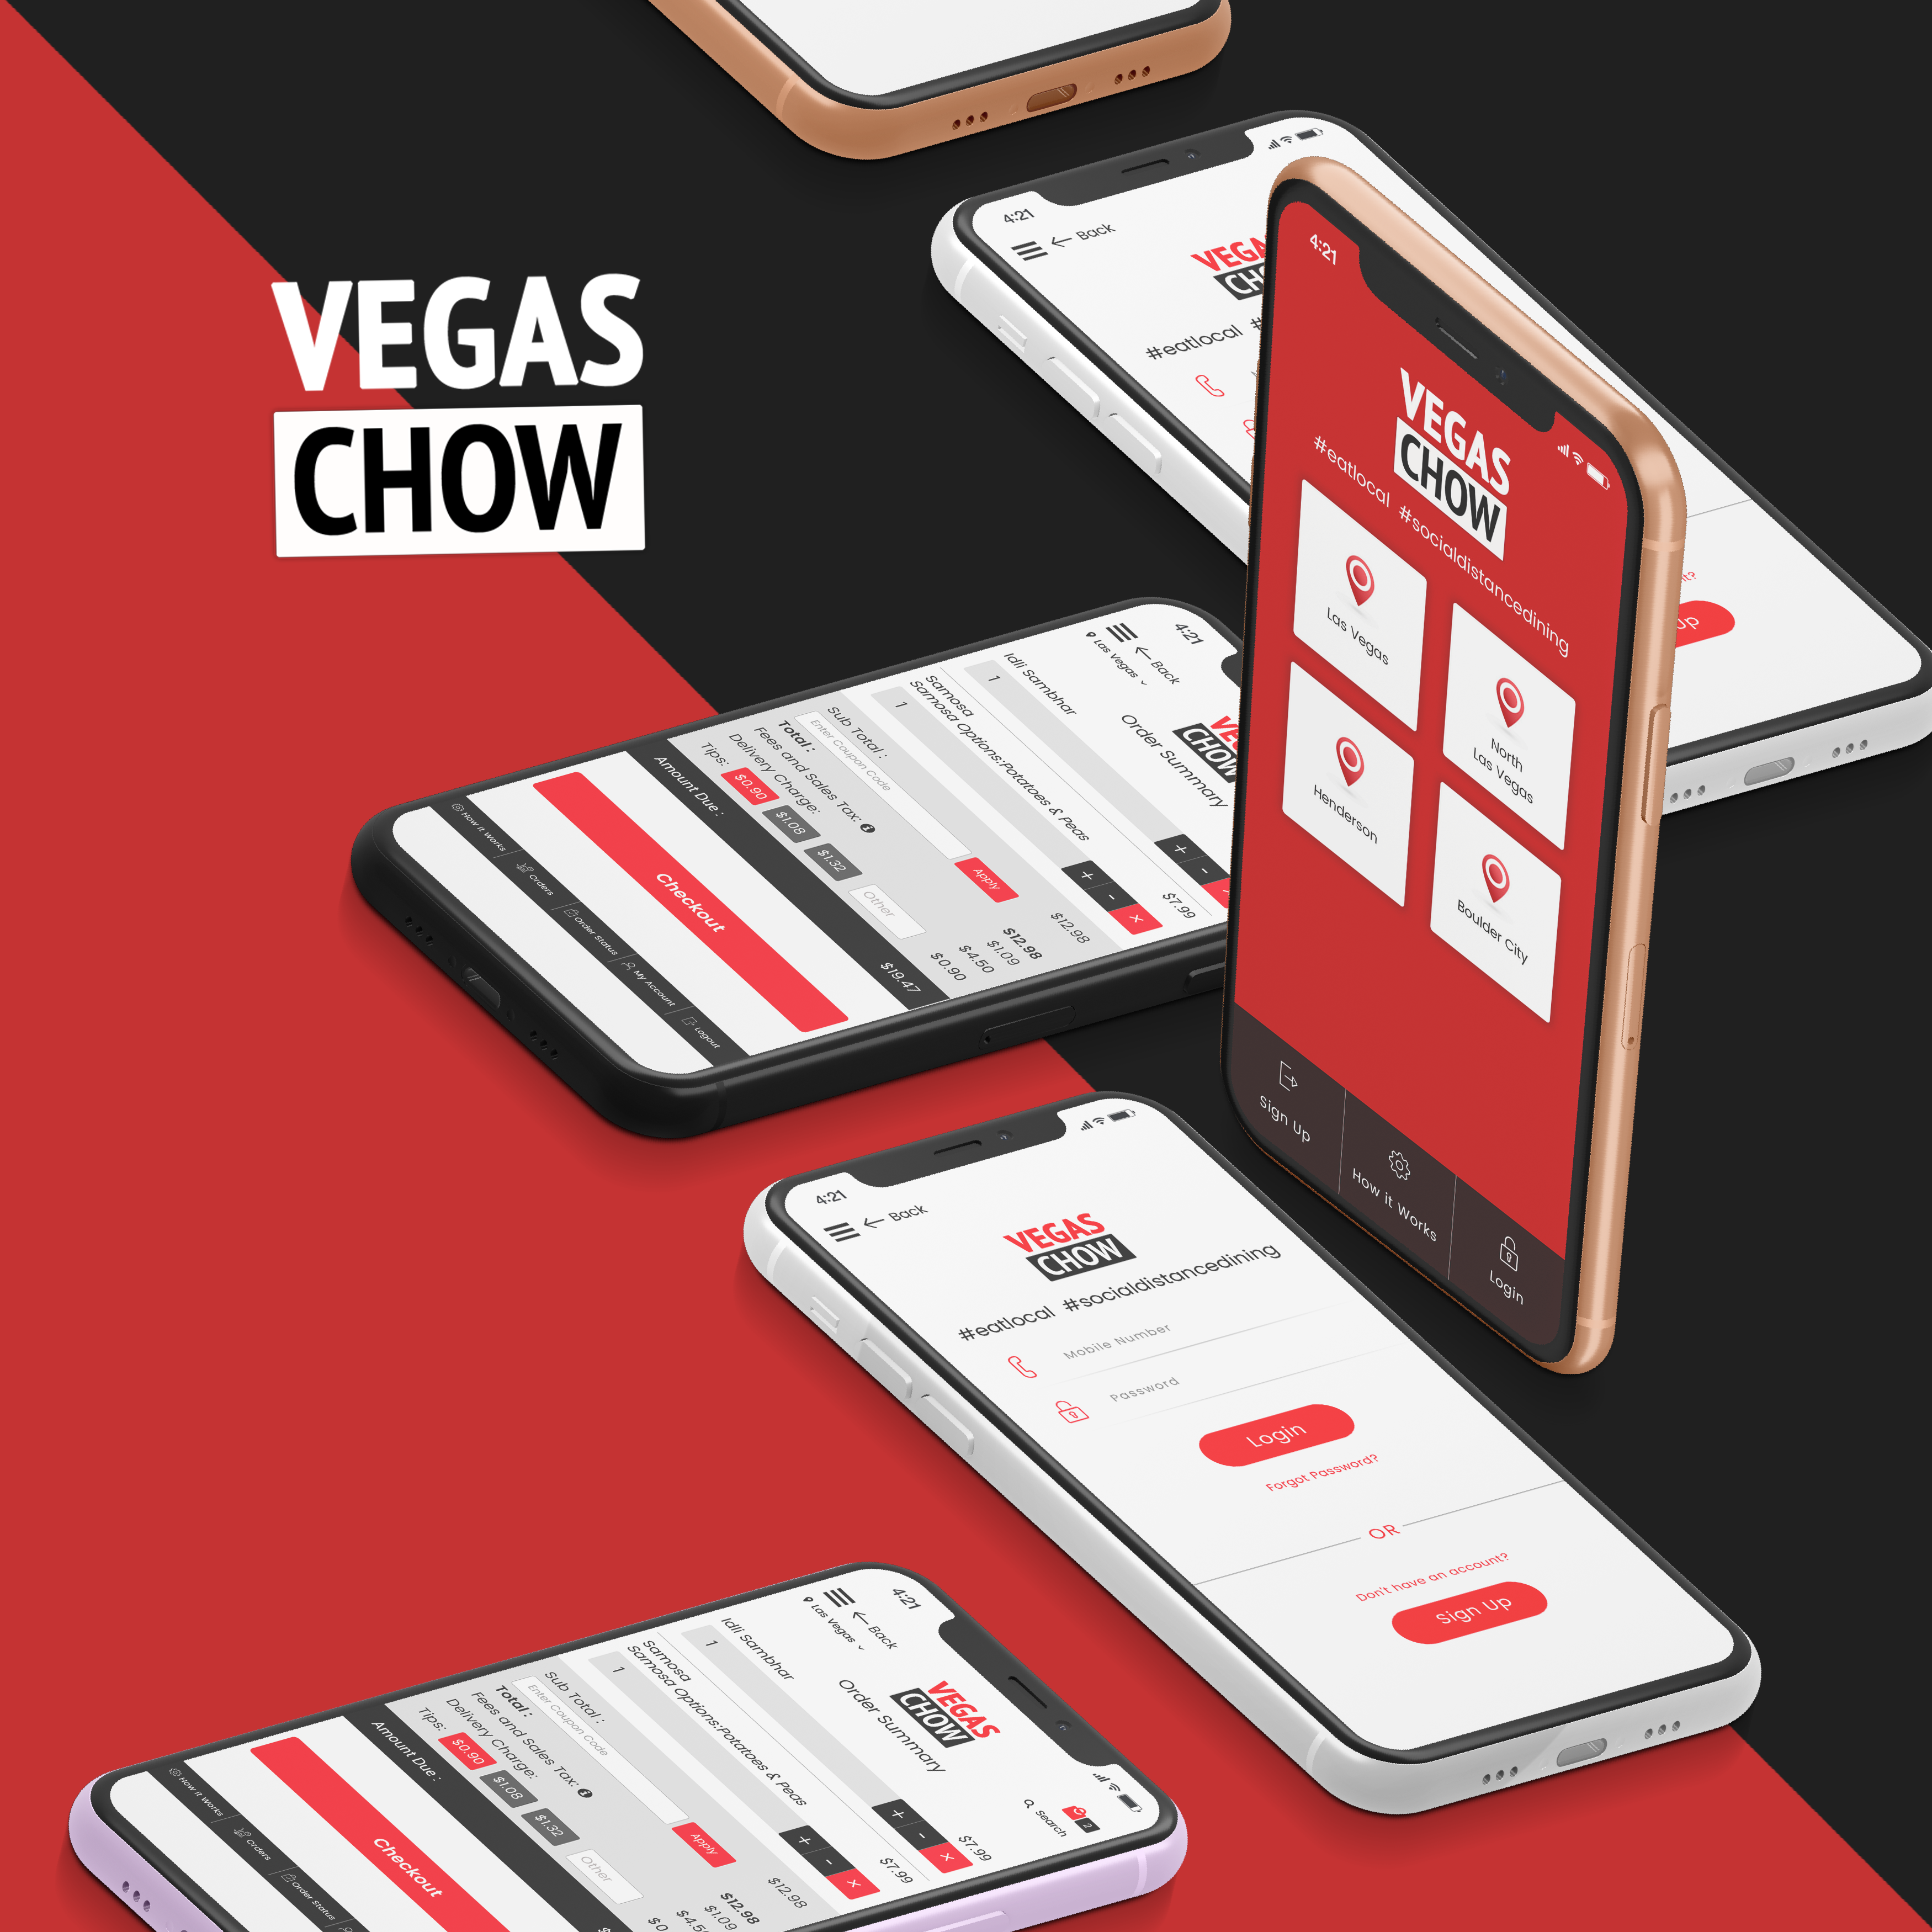 vegas-chow-mobile-app